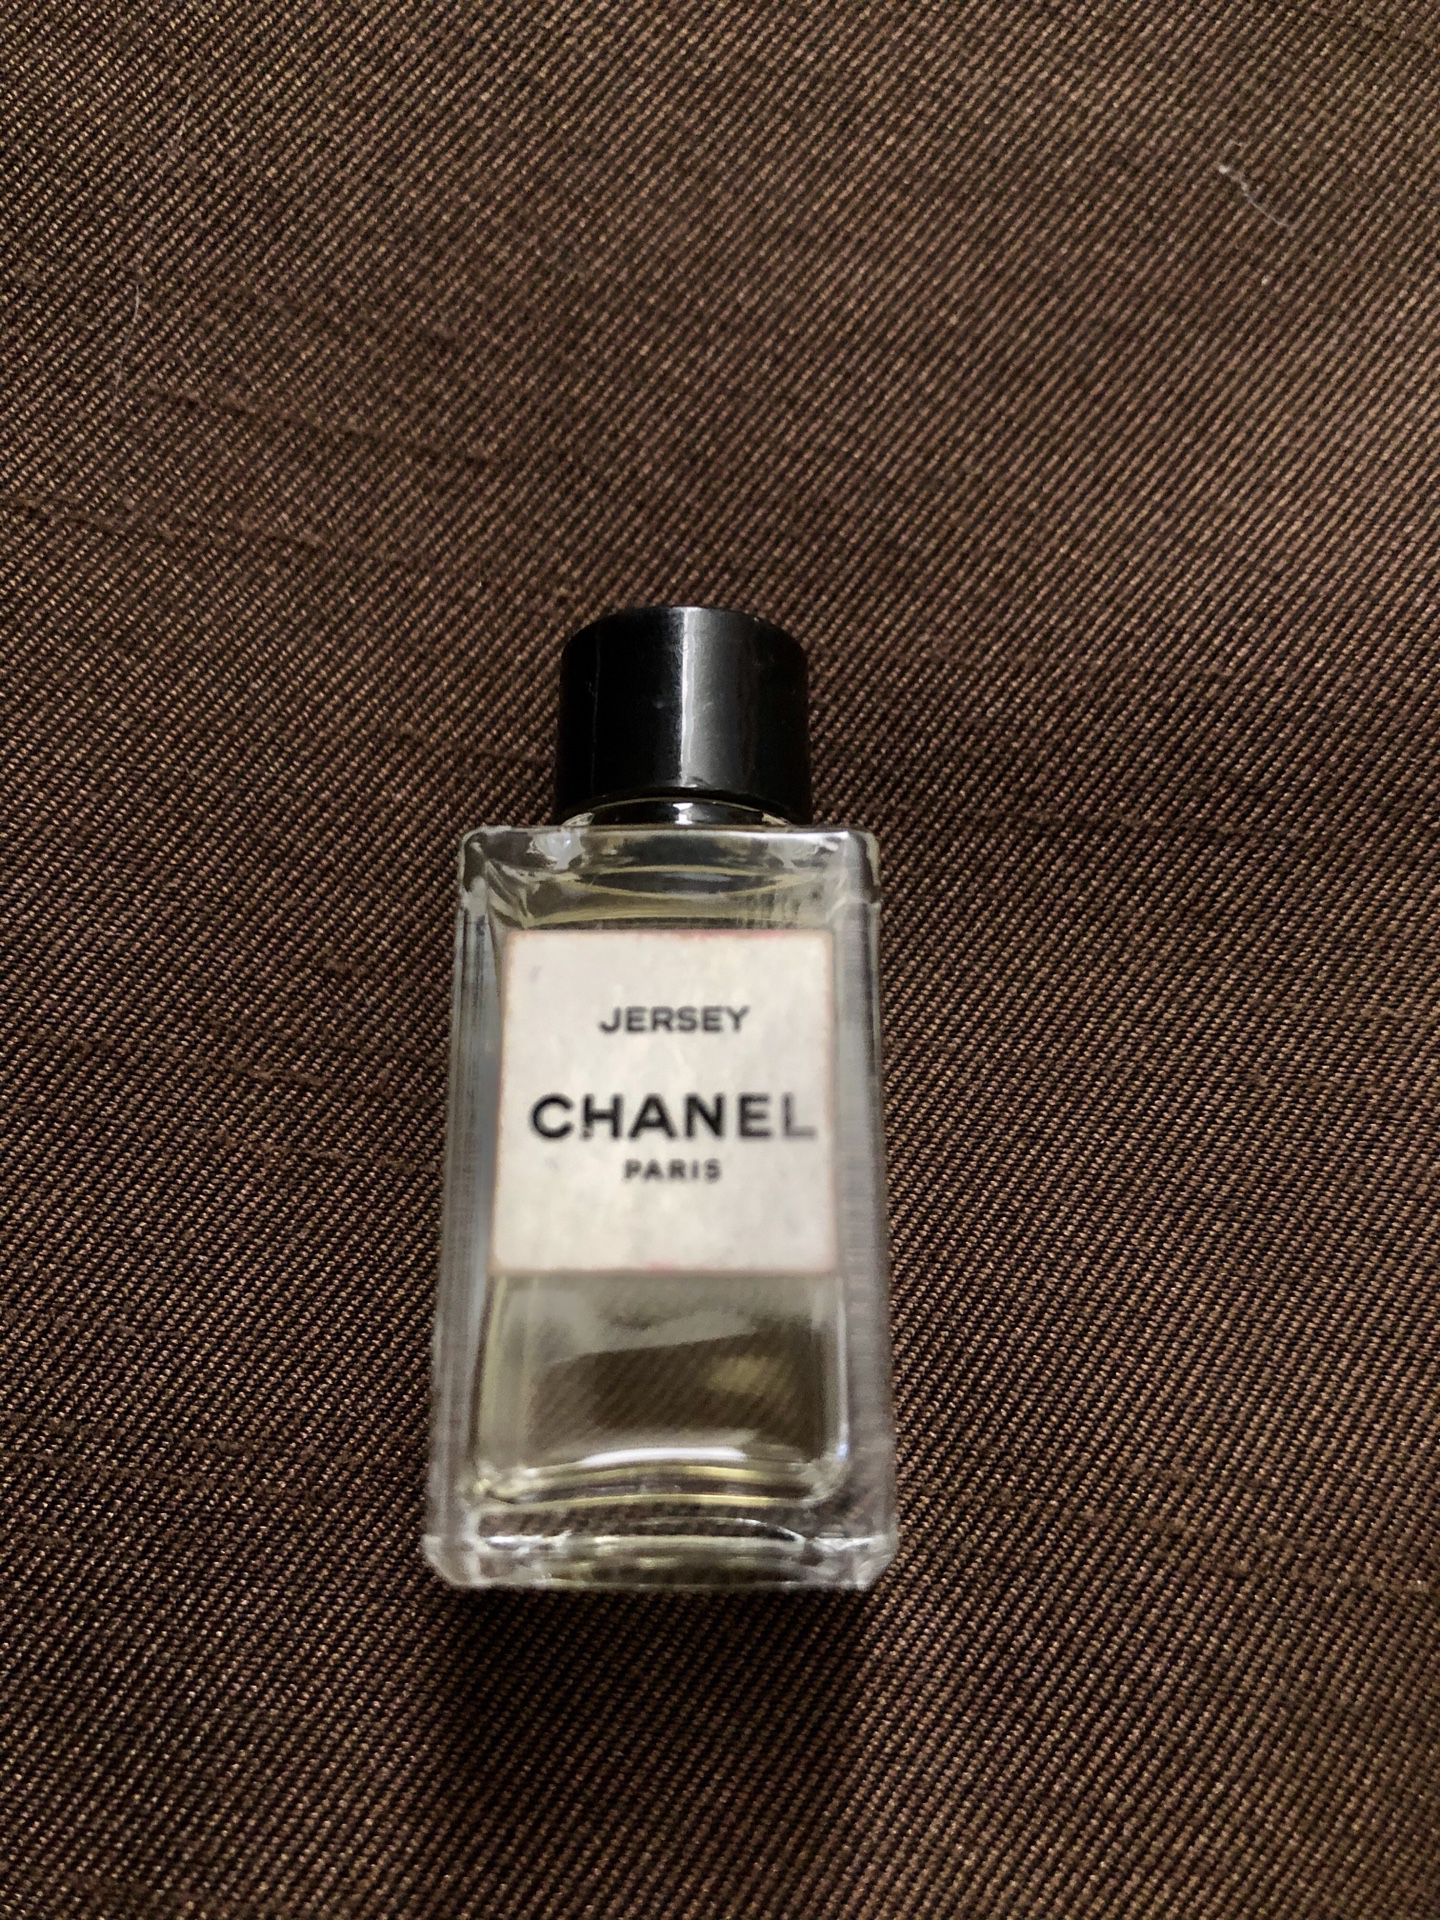 Chanel Jersey perfume